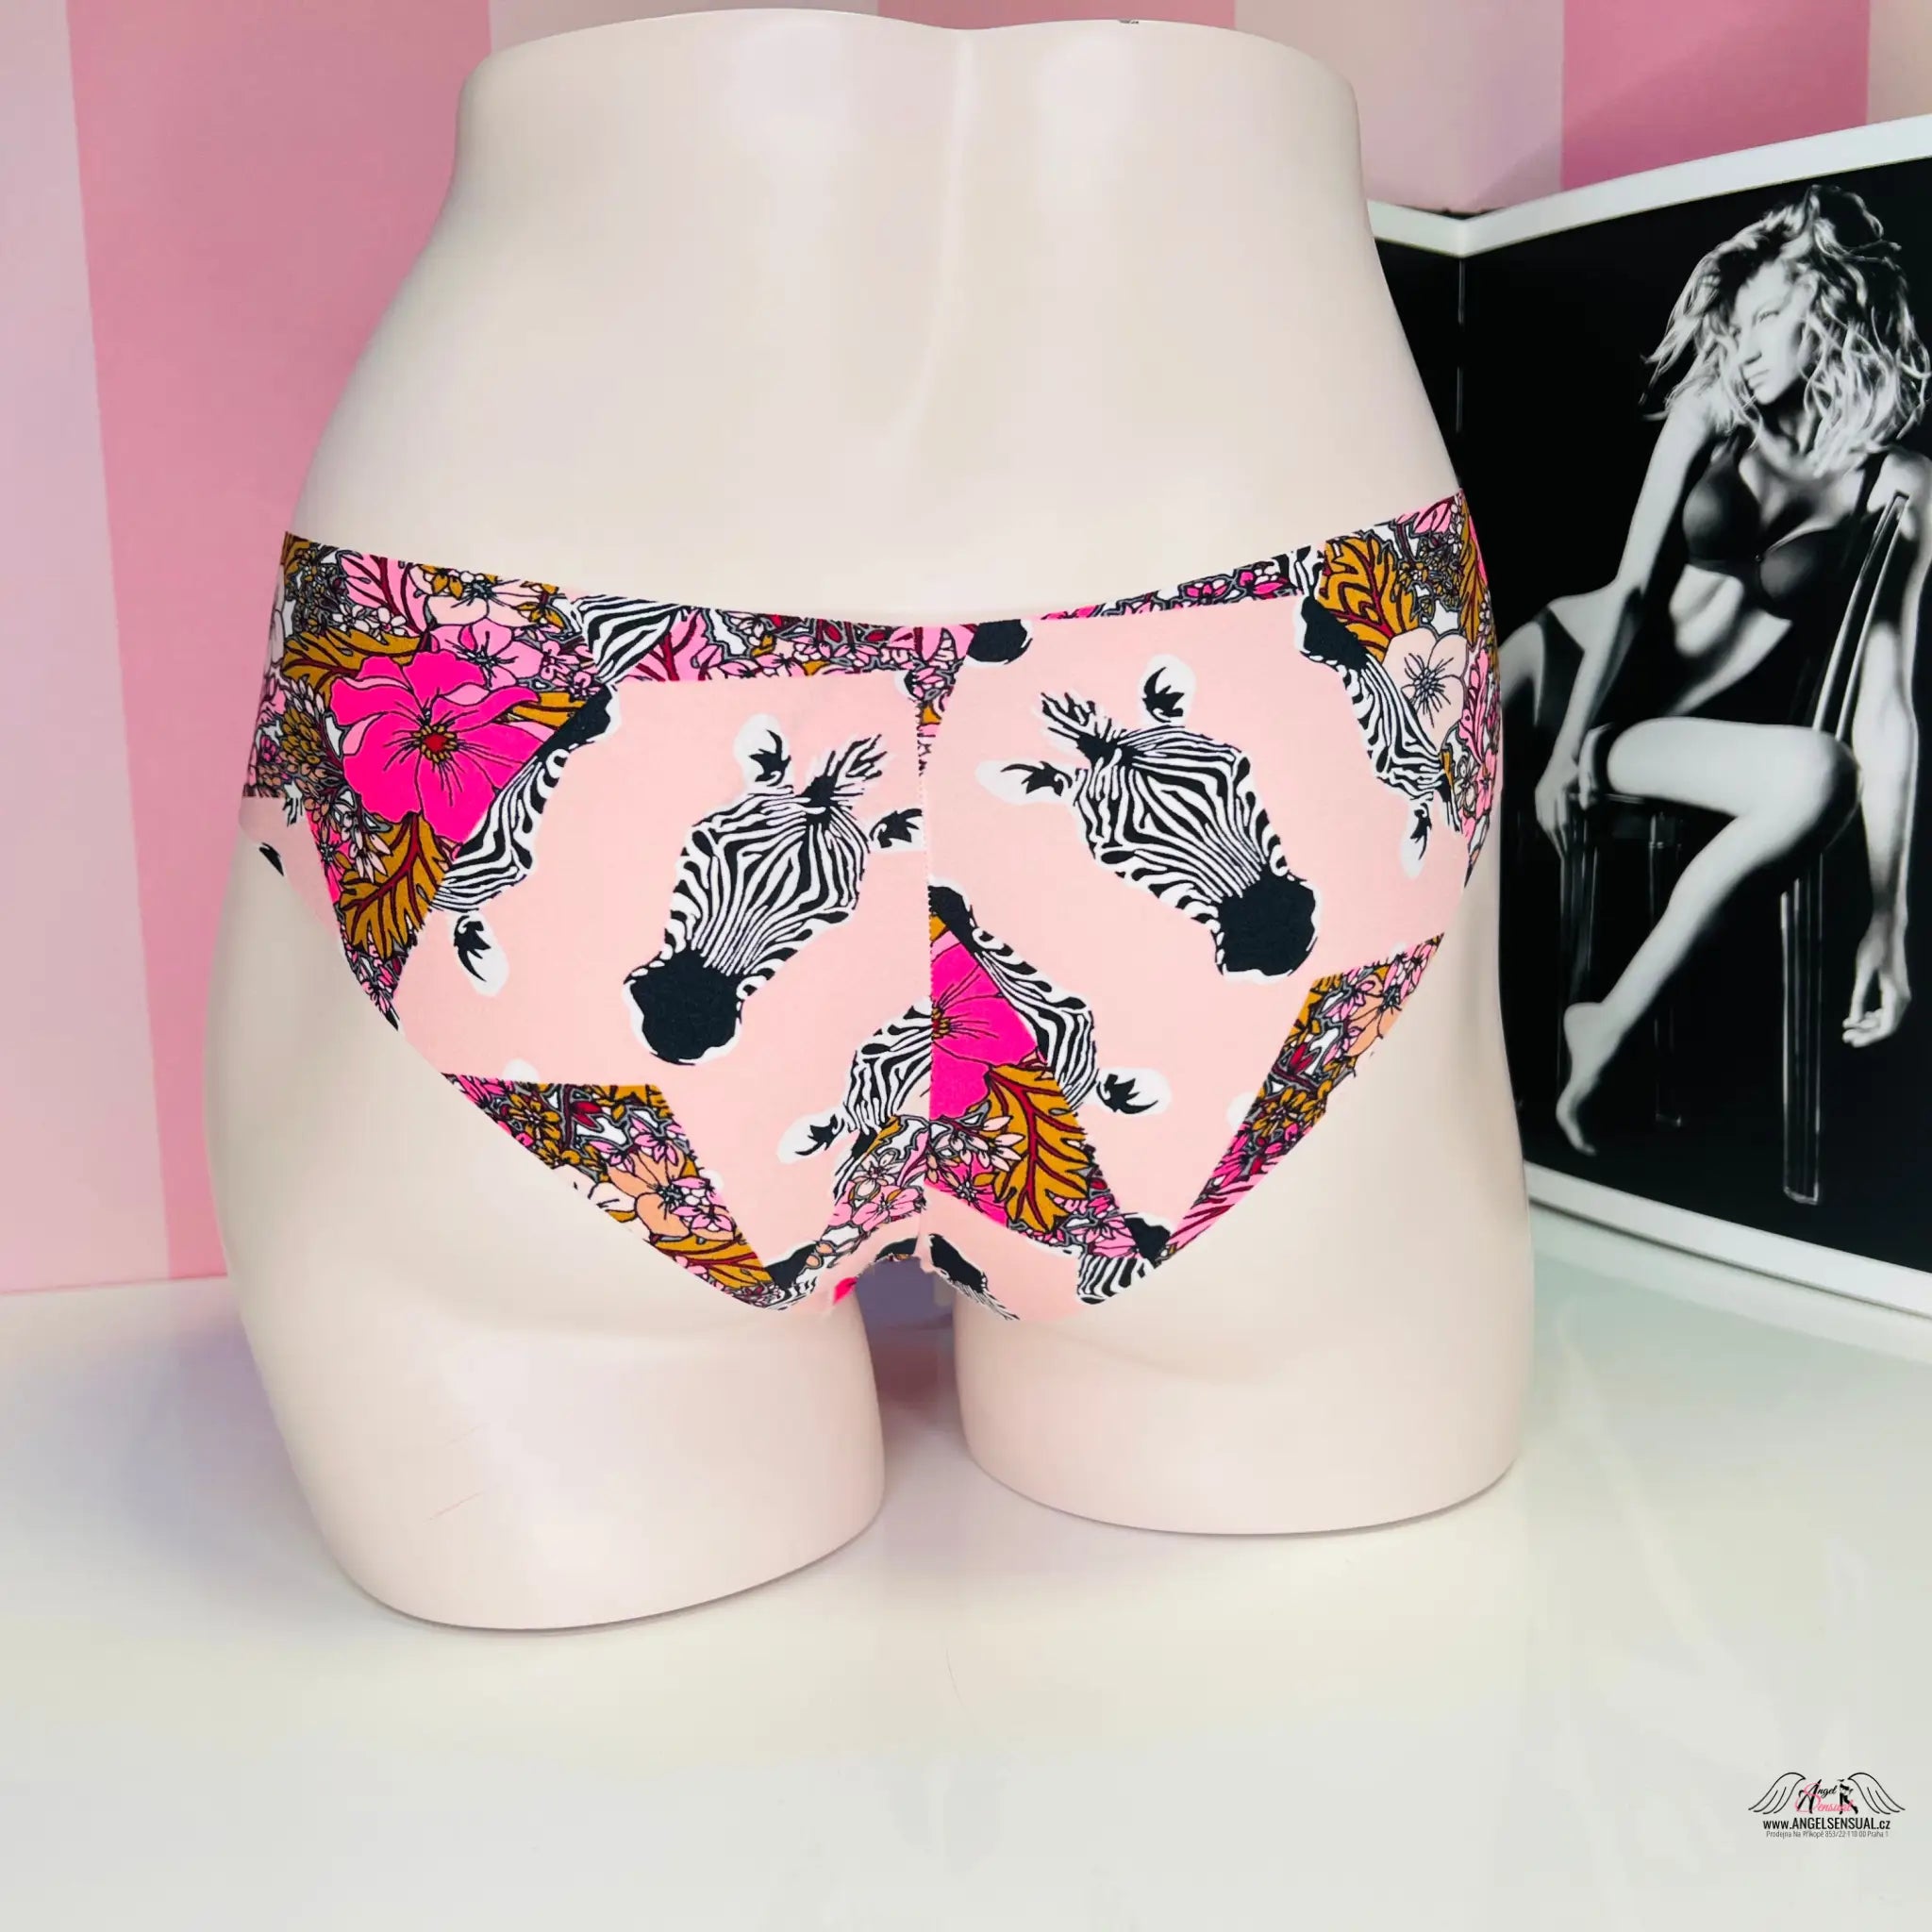 Barevné bezešvé kalhotky - Kalhotky Victoria’s Secret